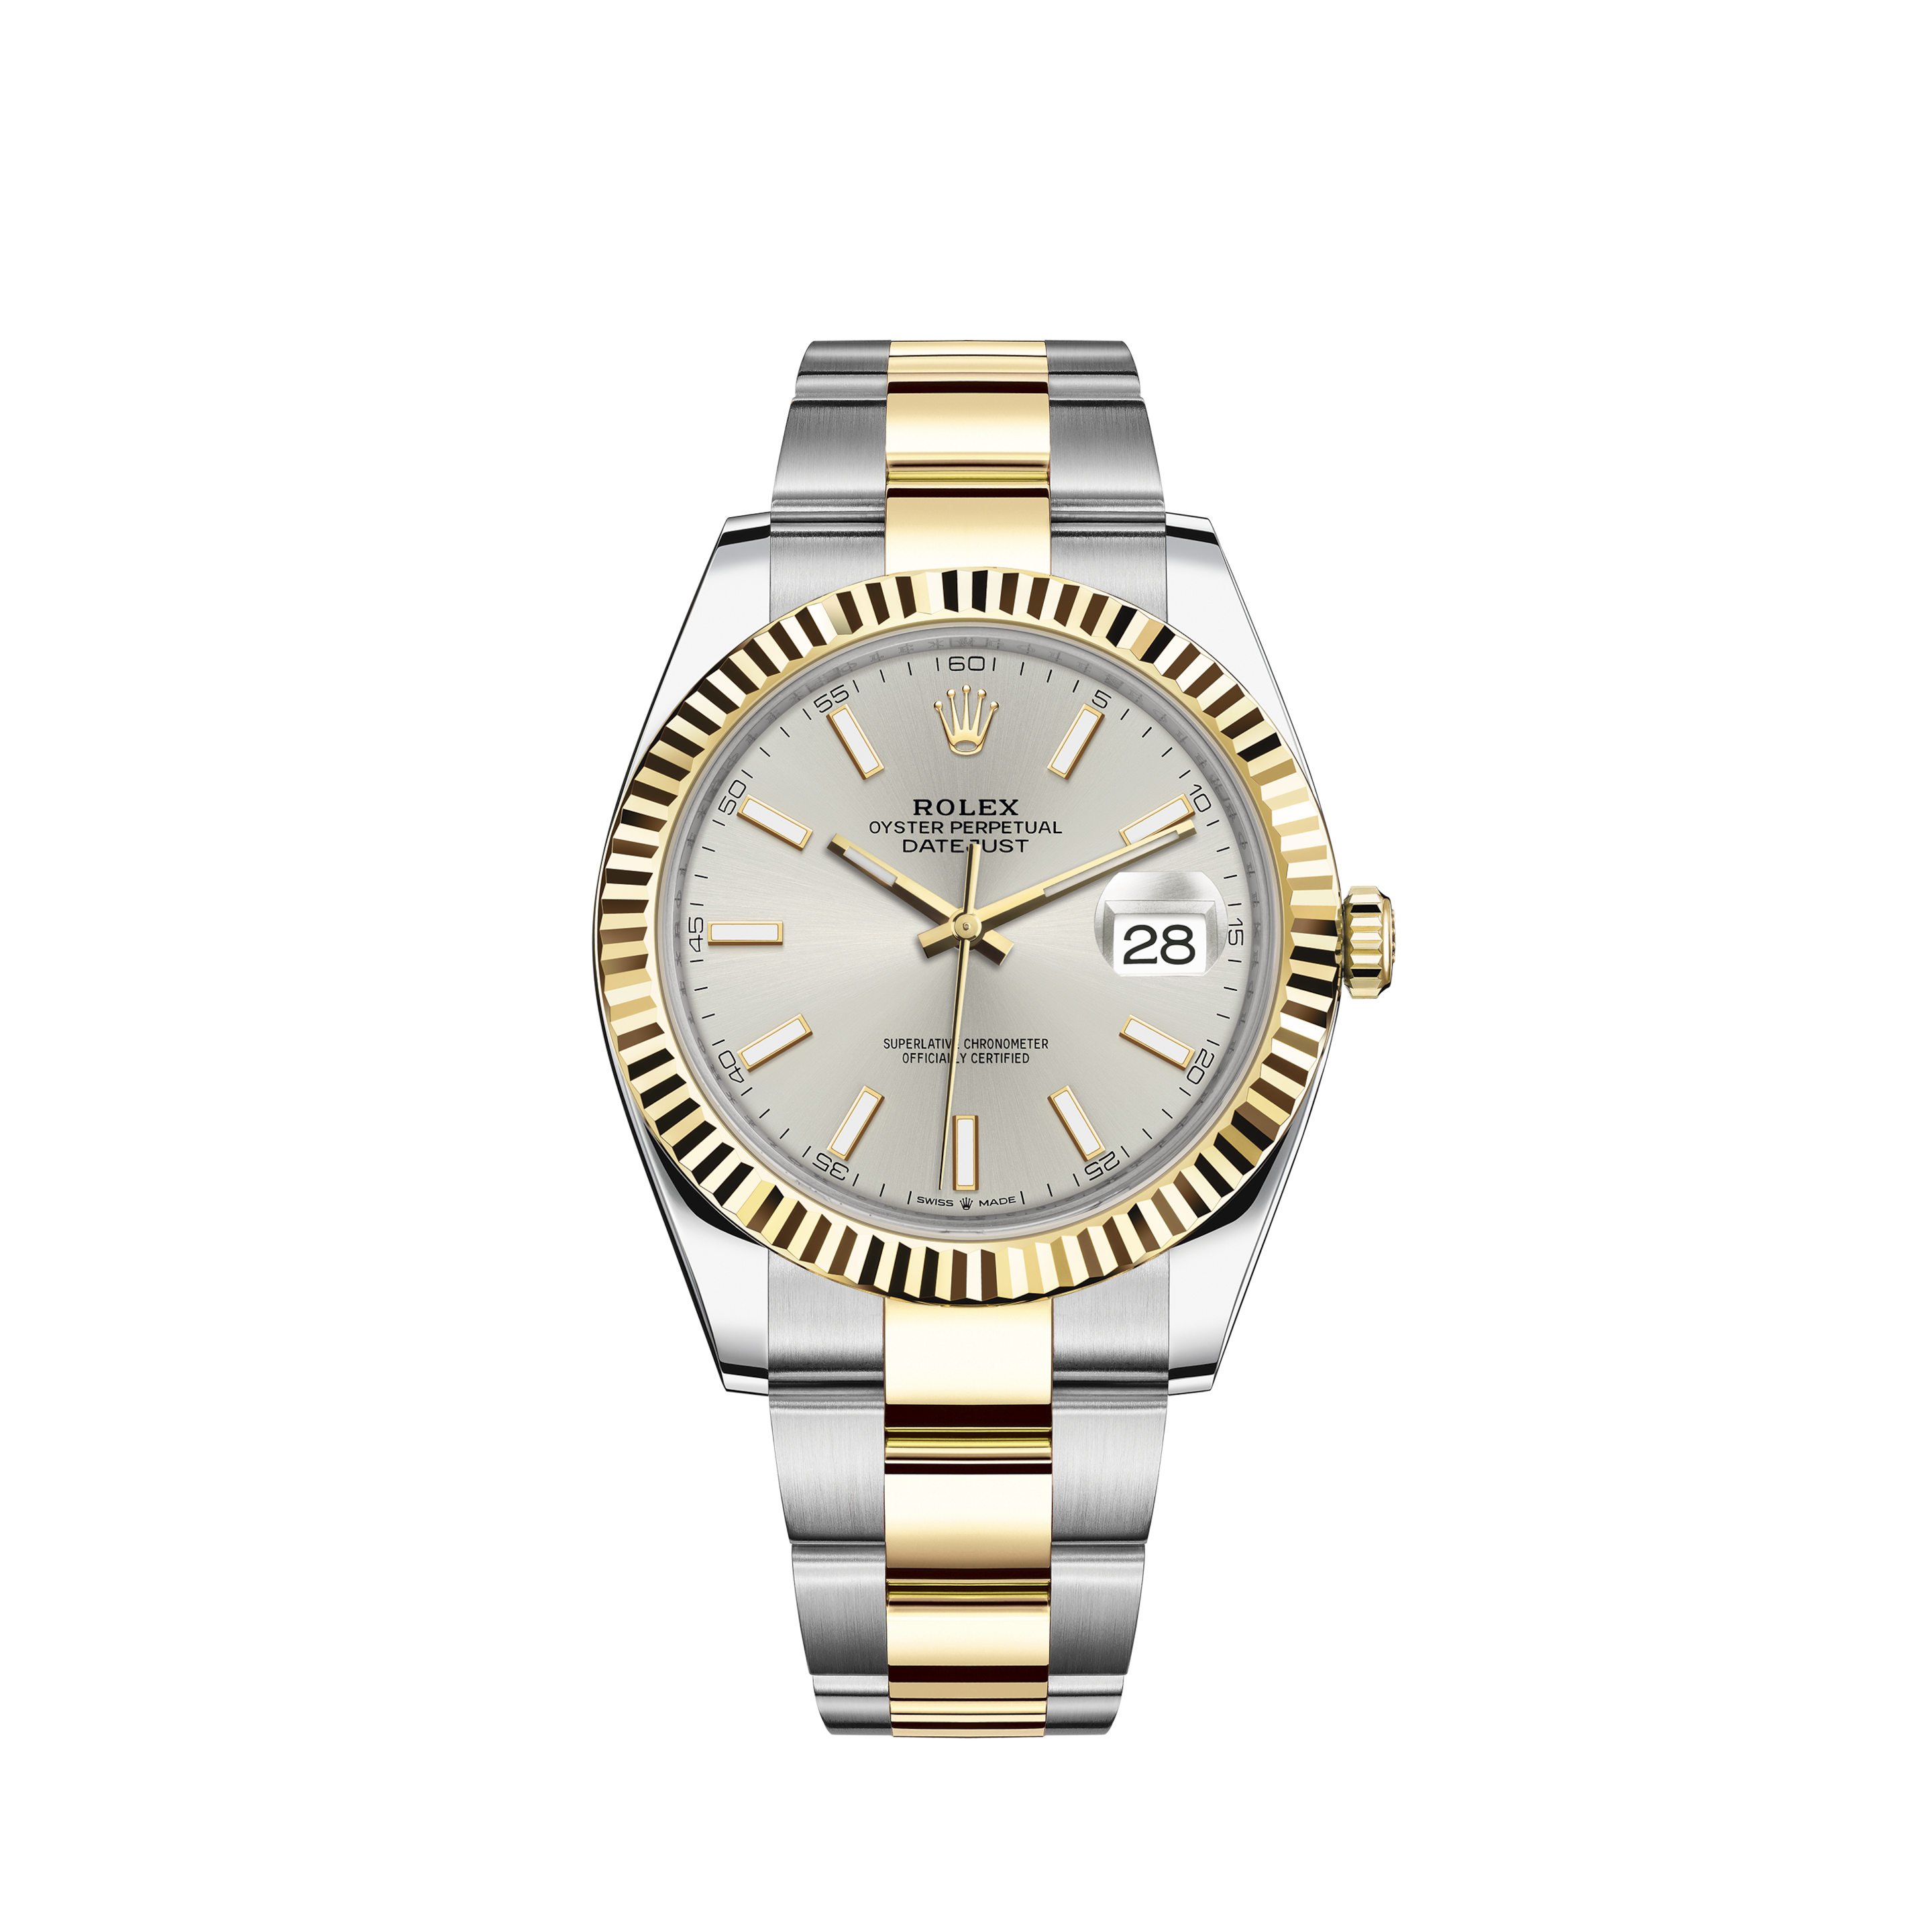 Rolex Datejust Steel Yellow Gold White Diamond Dial Ladies Watch 79173